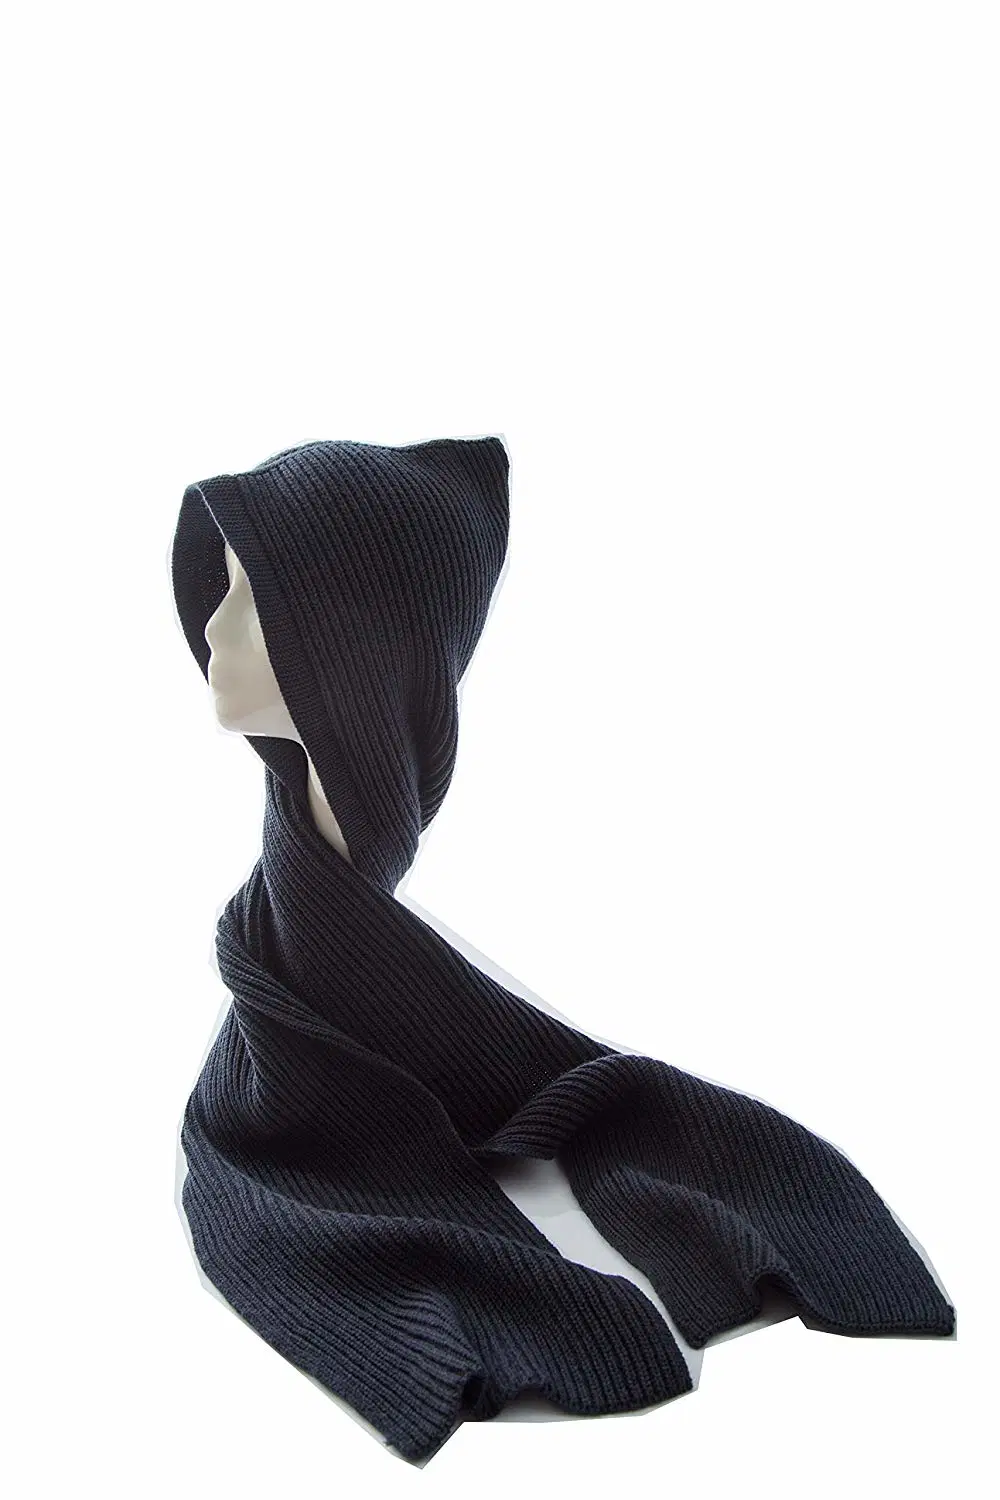 Factory Acrylic Women Headscarf Winter Warm Comfortable Crochet Knit Hooded Scarf Hat